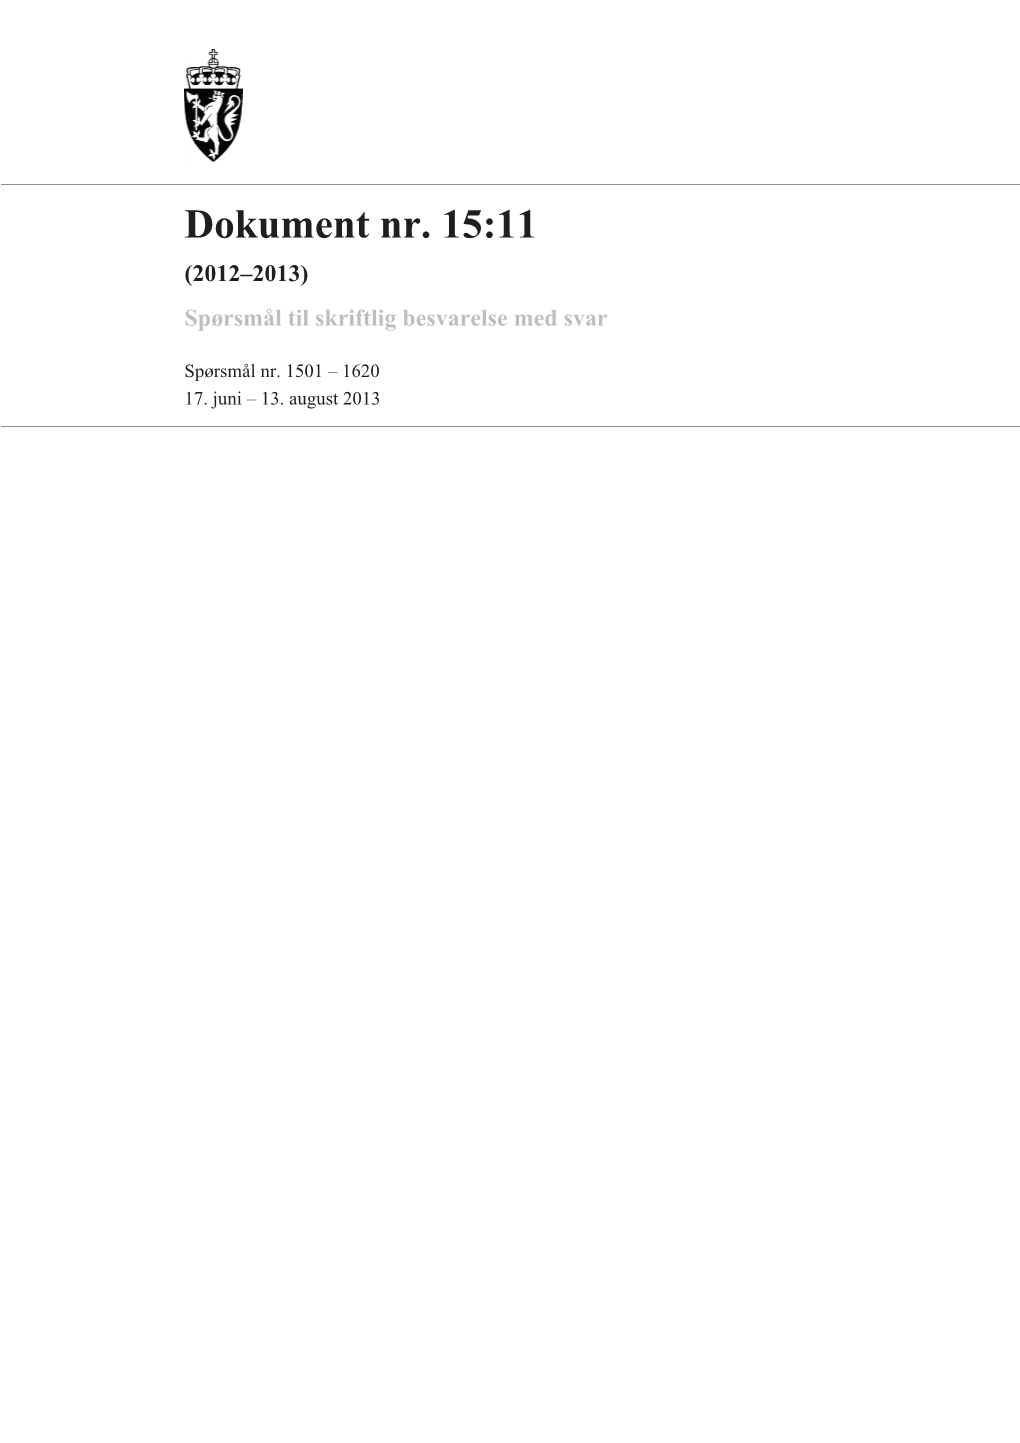 Dokument Nr. 15:11 (2012-2013). Spørsmål Nr. 1501-1620